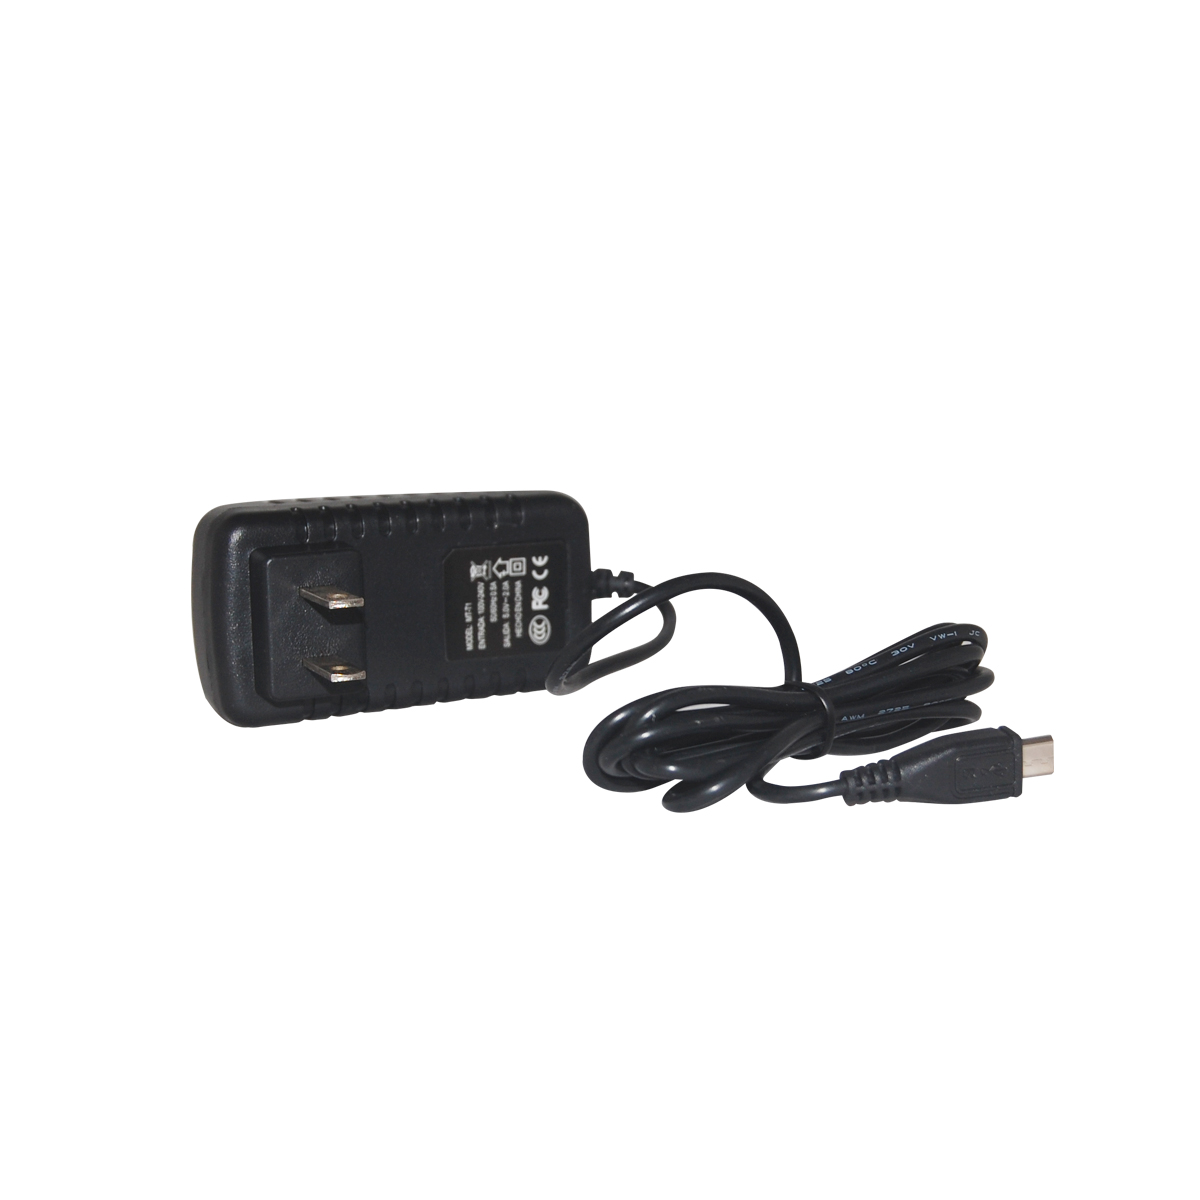 Adaptador bluetooth interfase USB 531233 color negro